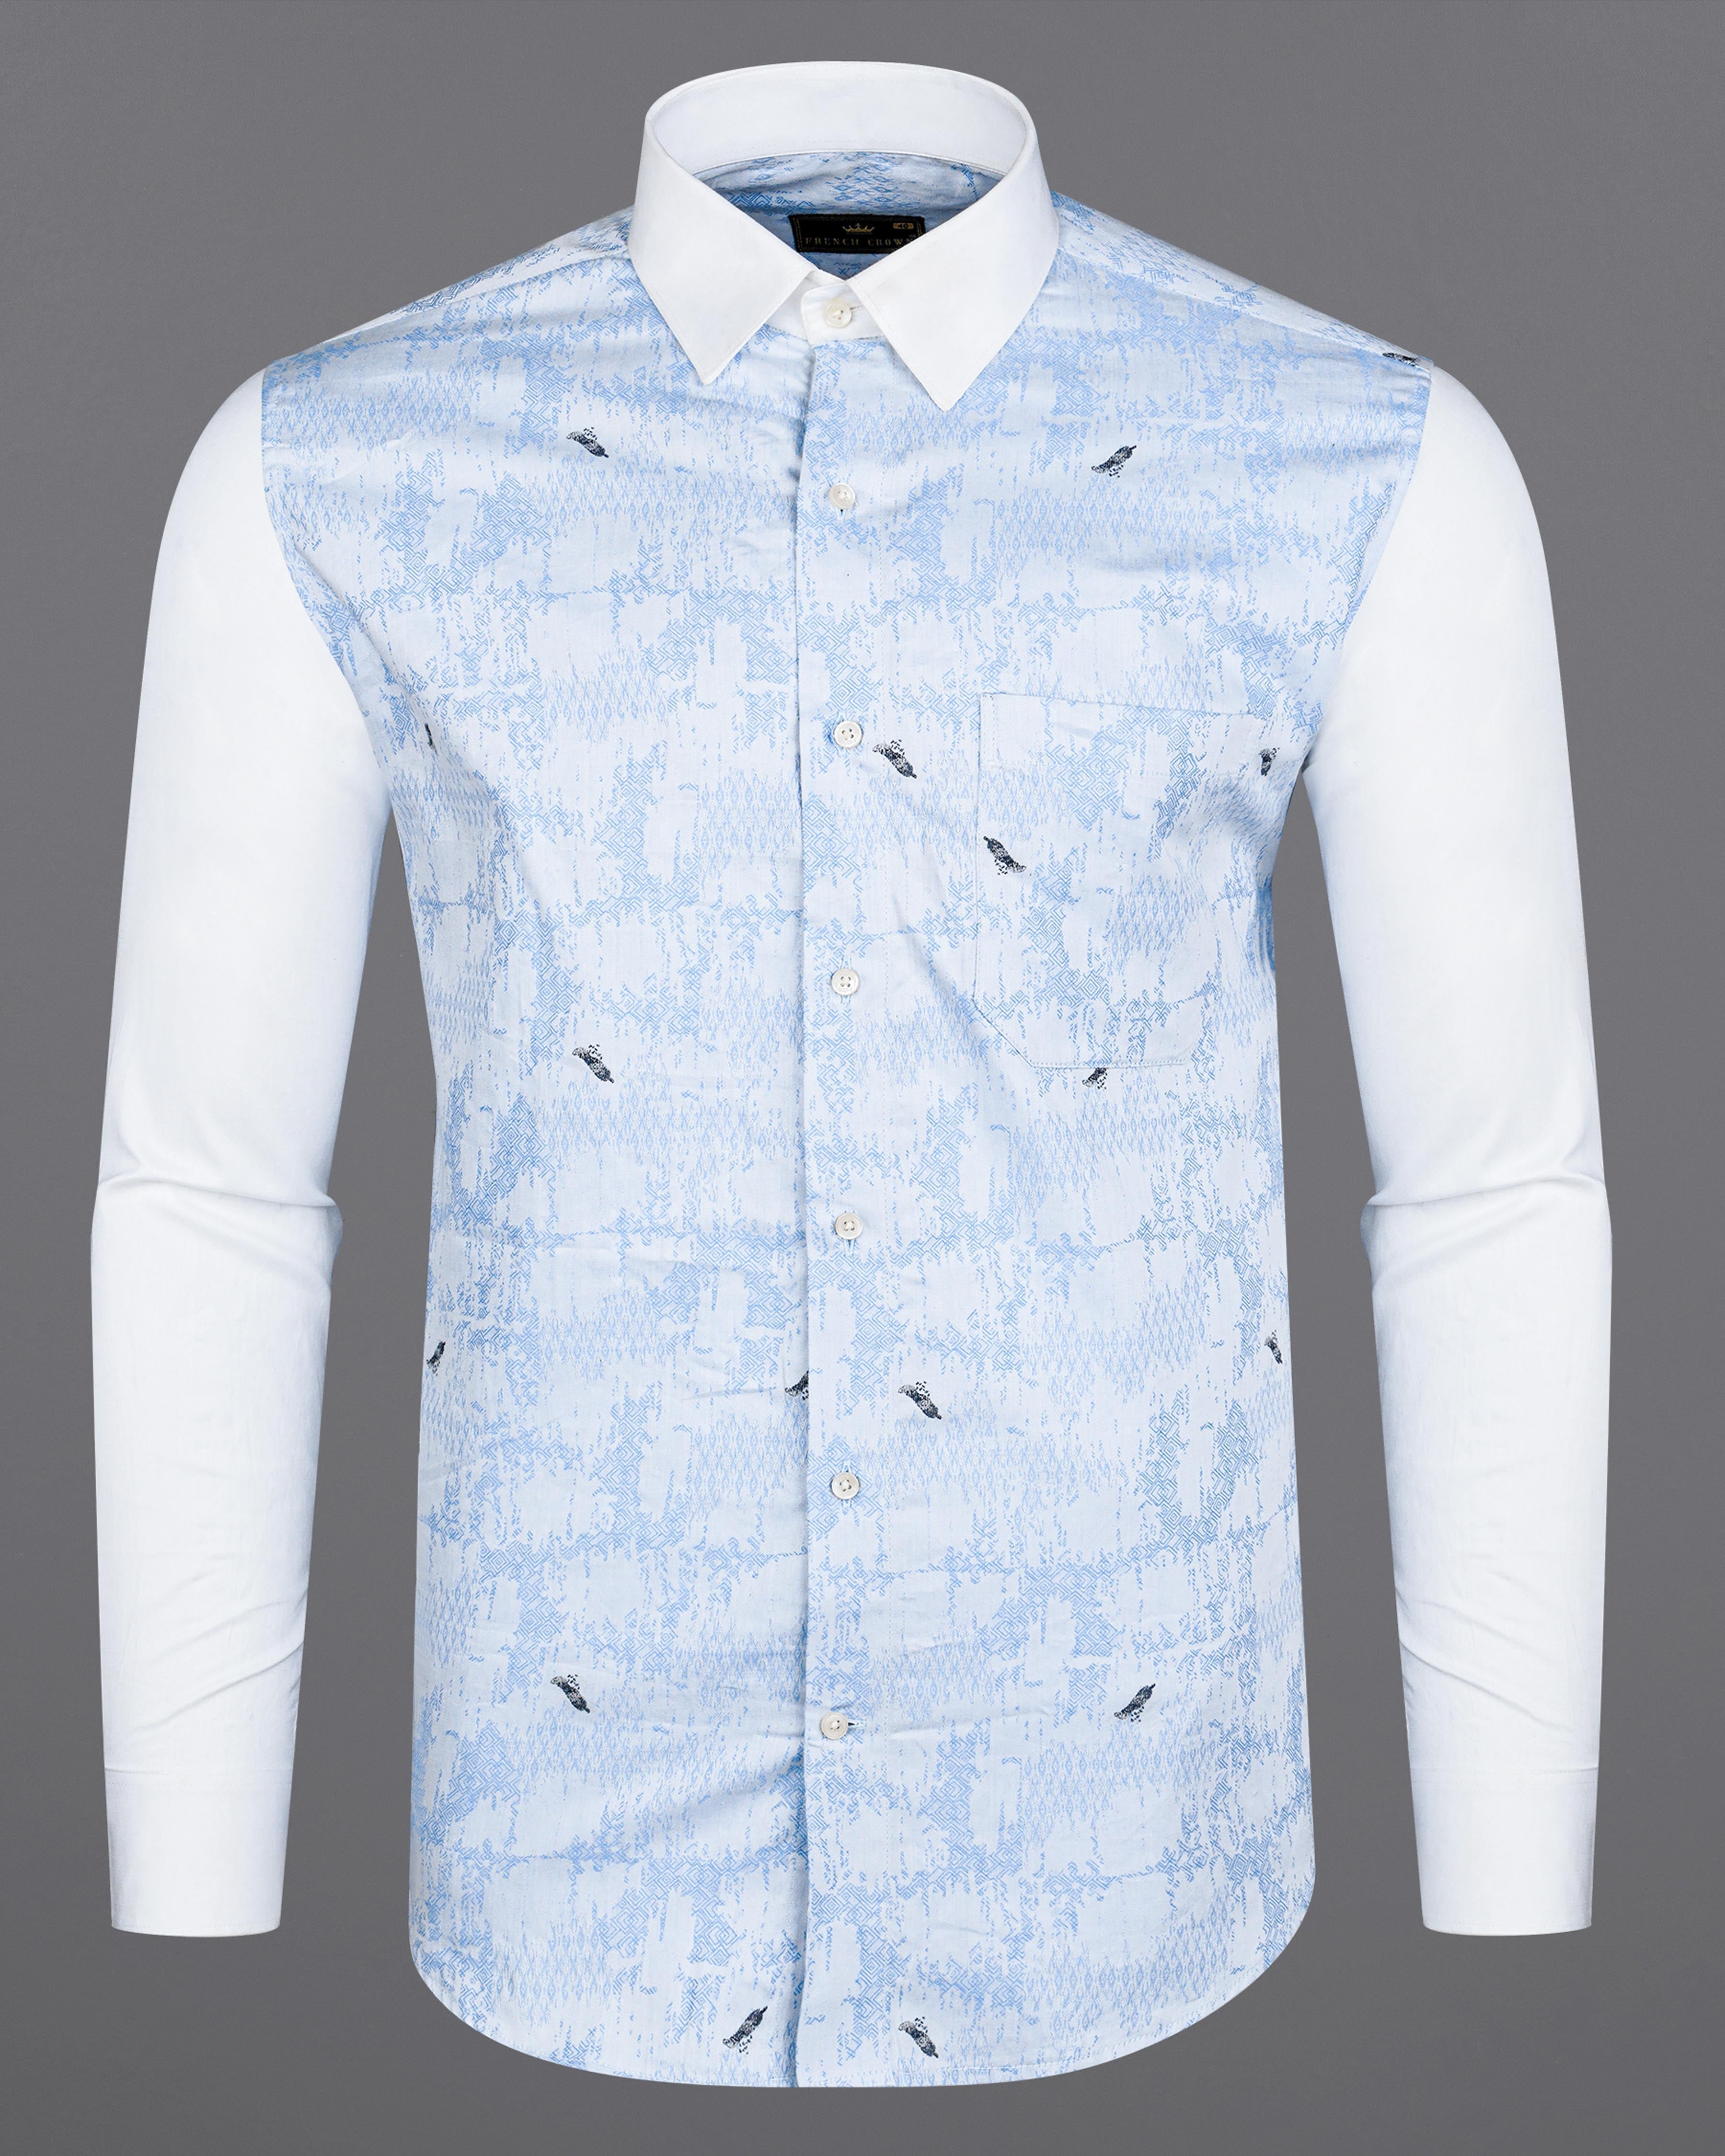 Bright White with Glacier Blue Jacquard Textured Premium Giza Cotton Designer Shirt 8395-P81-38, 8395-P81-H-38, 8395-P81-39,8395-P81-H-39, 8395-P81-40, 8395-P81-H-40, 8395-P81-42, 8395-P81-H-42, 8395-P81-44, 8395-P81-H-44, 8395-P81-46, 8395-P81-H-46, 8395-P81-48, 8395-P81-H-48, 8395-P81-50, 8395-P81-H-50, 8395-P81-52, 8395-P81-H-52